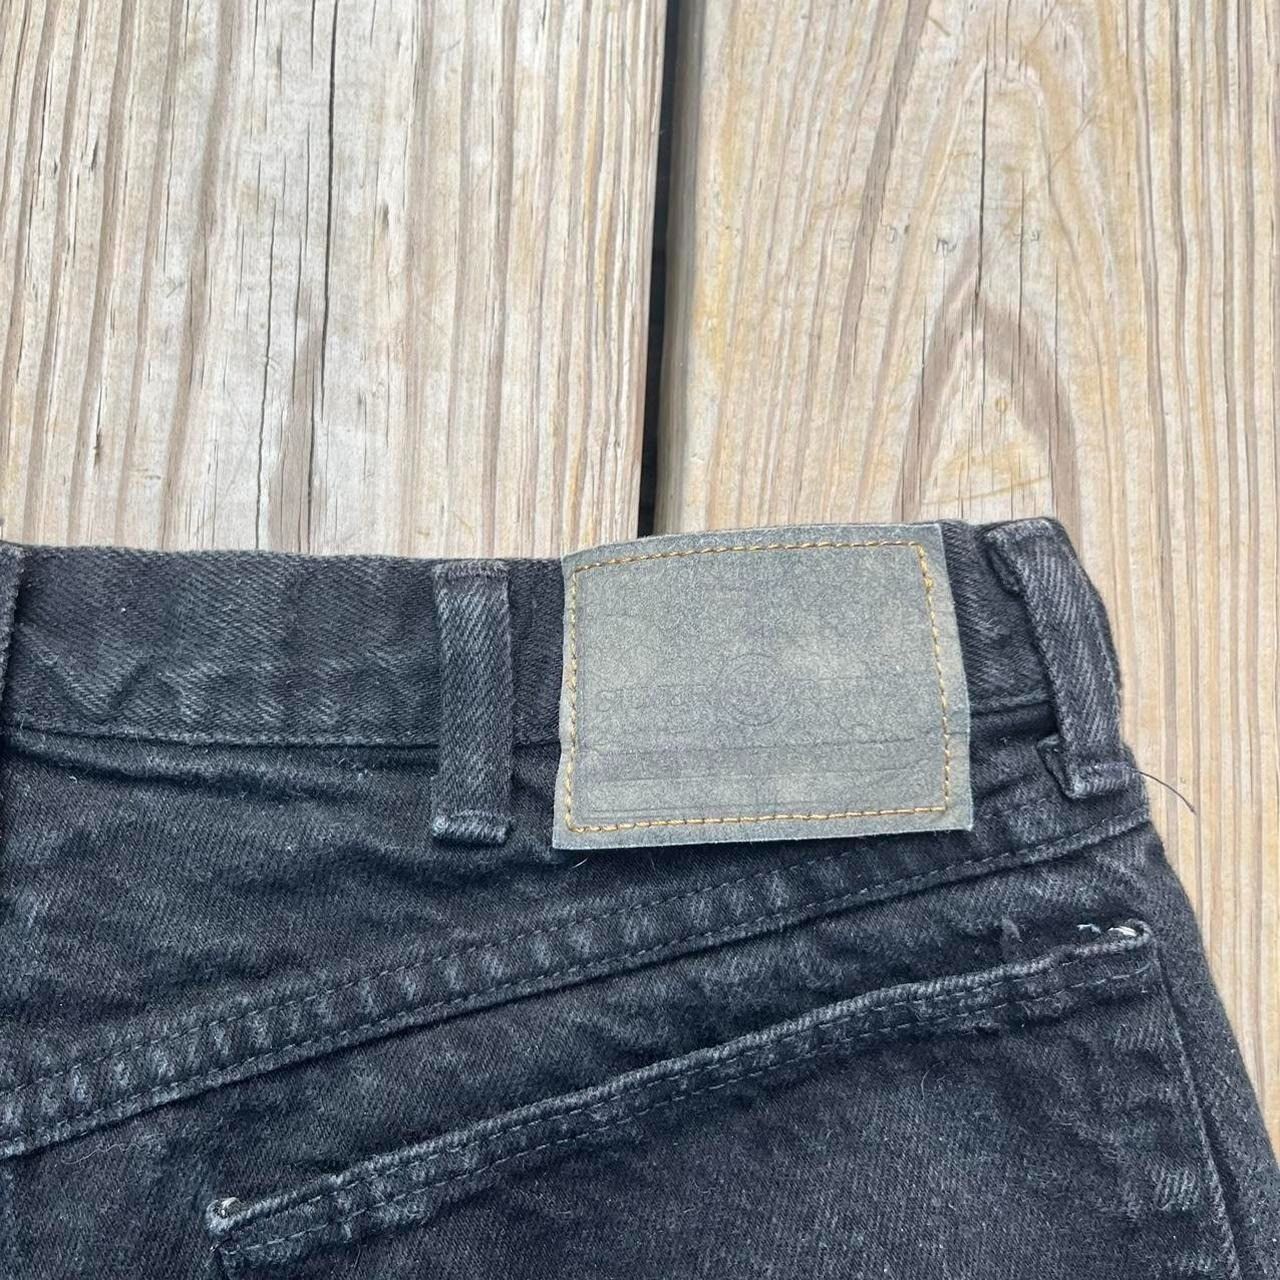 Vintage Vintage Wrangler Jorts Black denim shorts made in USA Size US 32 / EU 48 - 3 Thumbnail